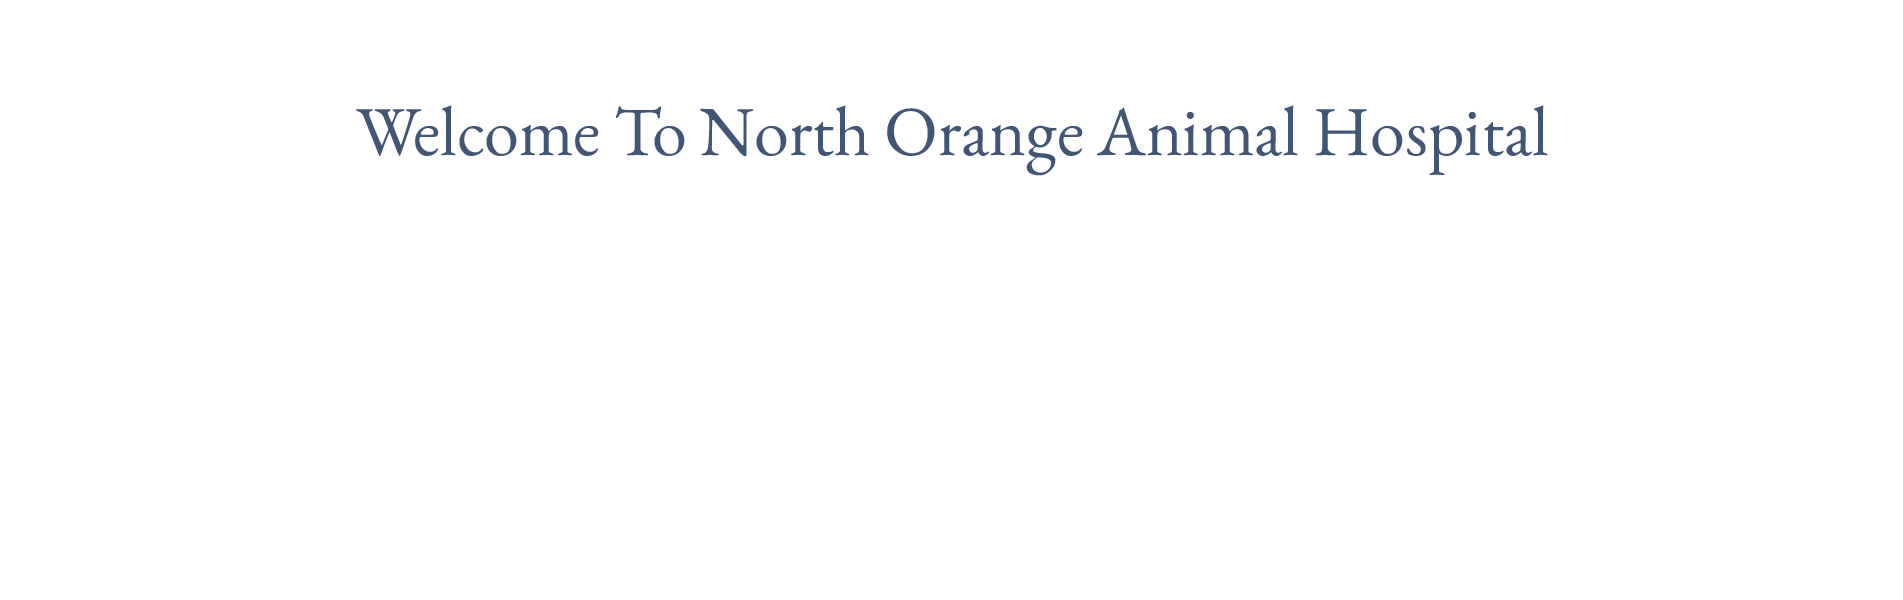 North Orange Animal Hospital | Apopka Vet For The 35 Years